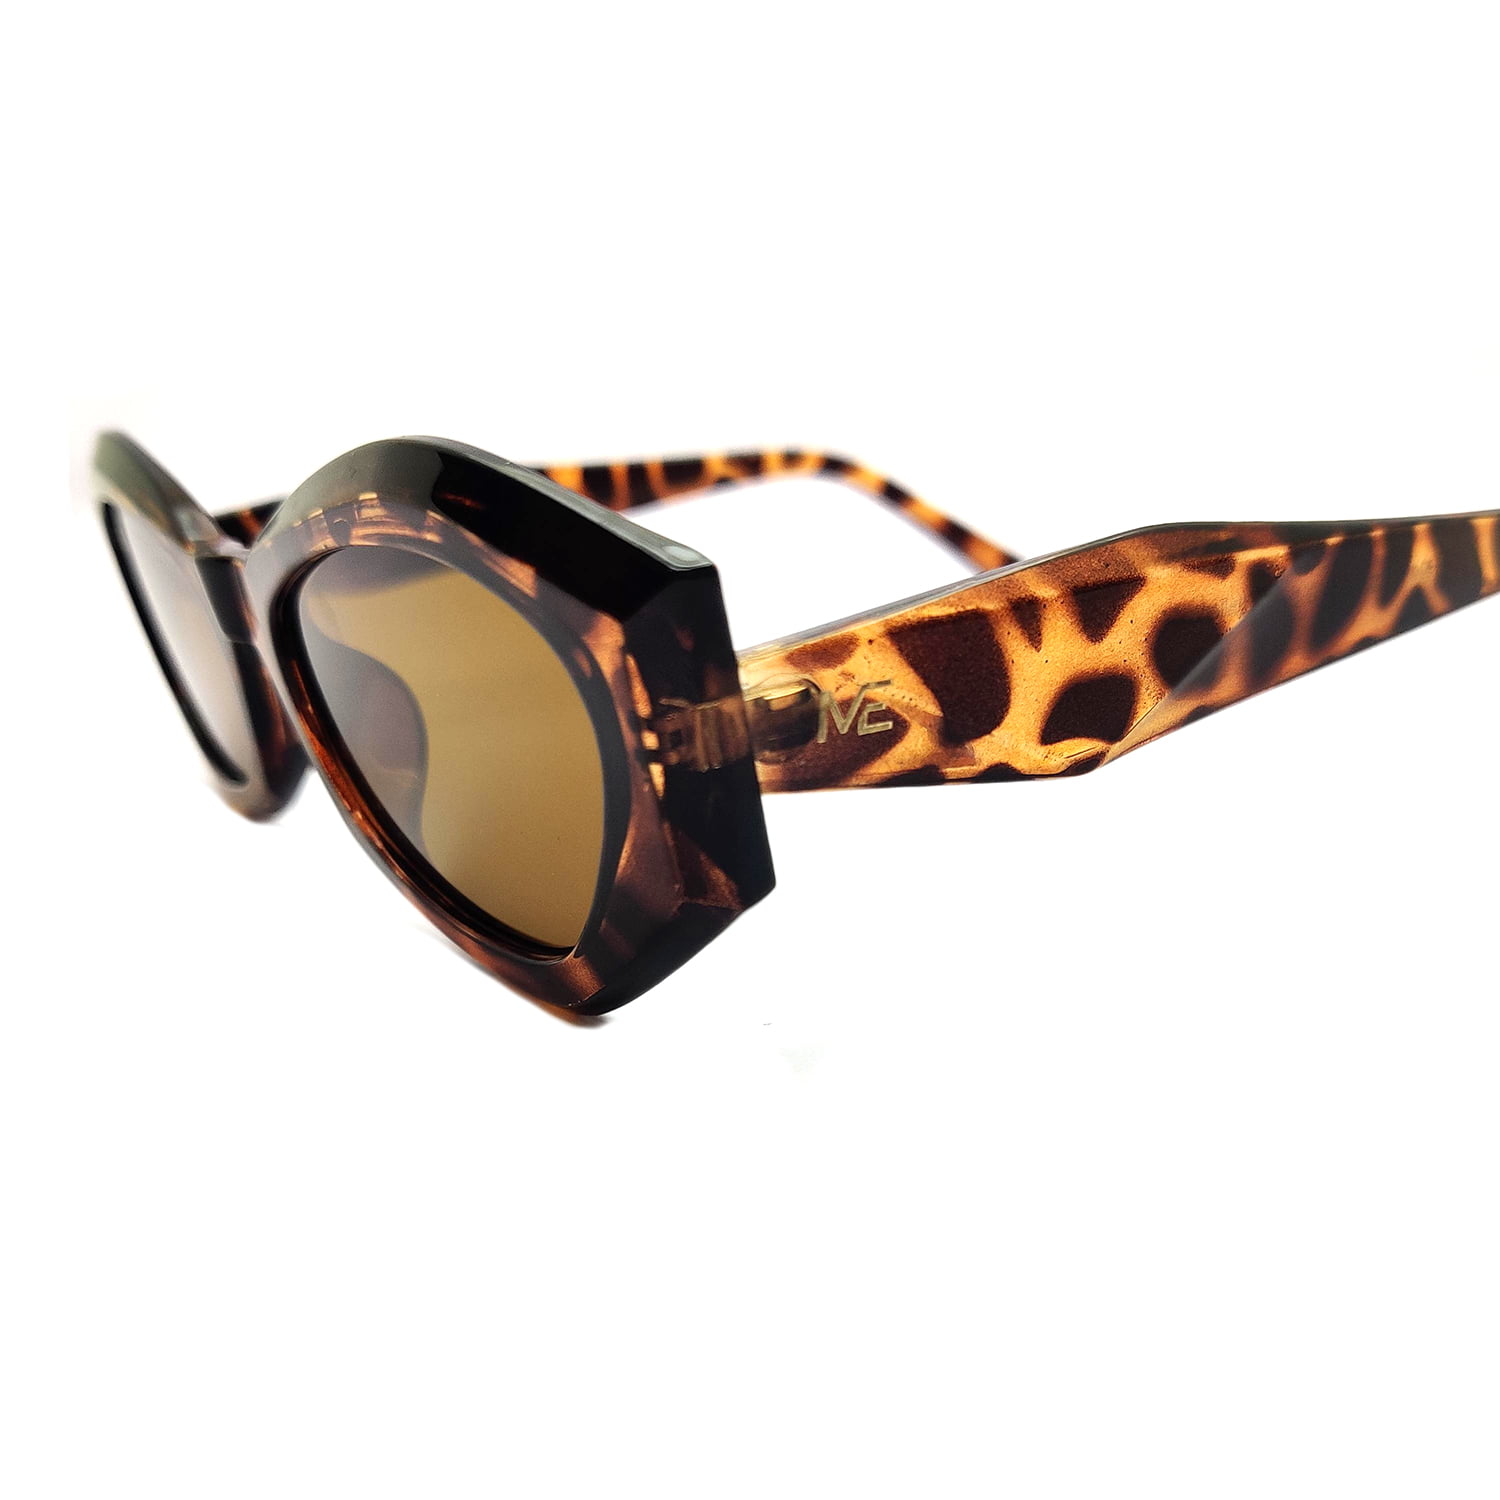 Buy Leopard Sunglasses online